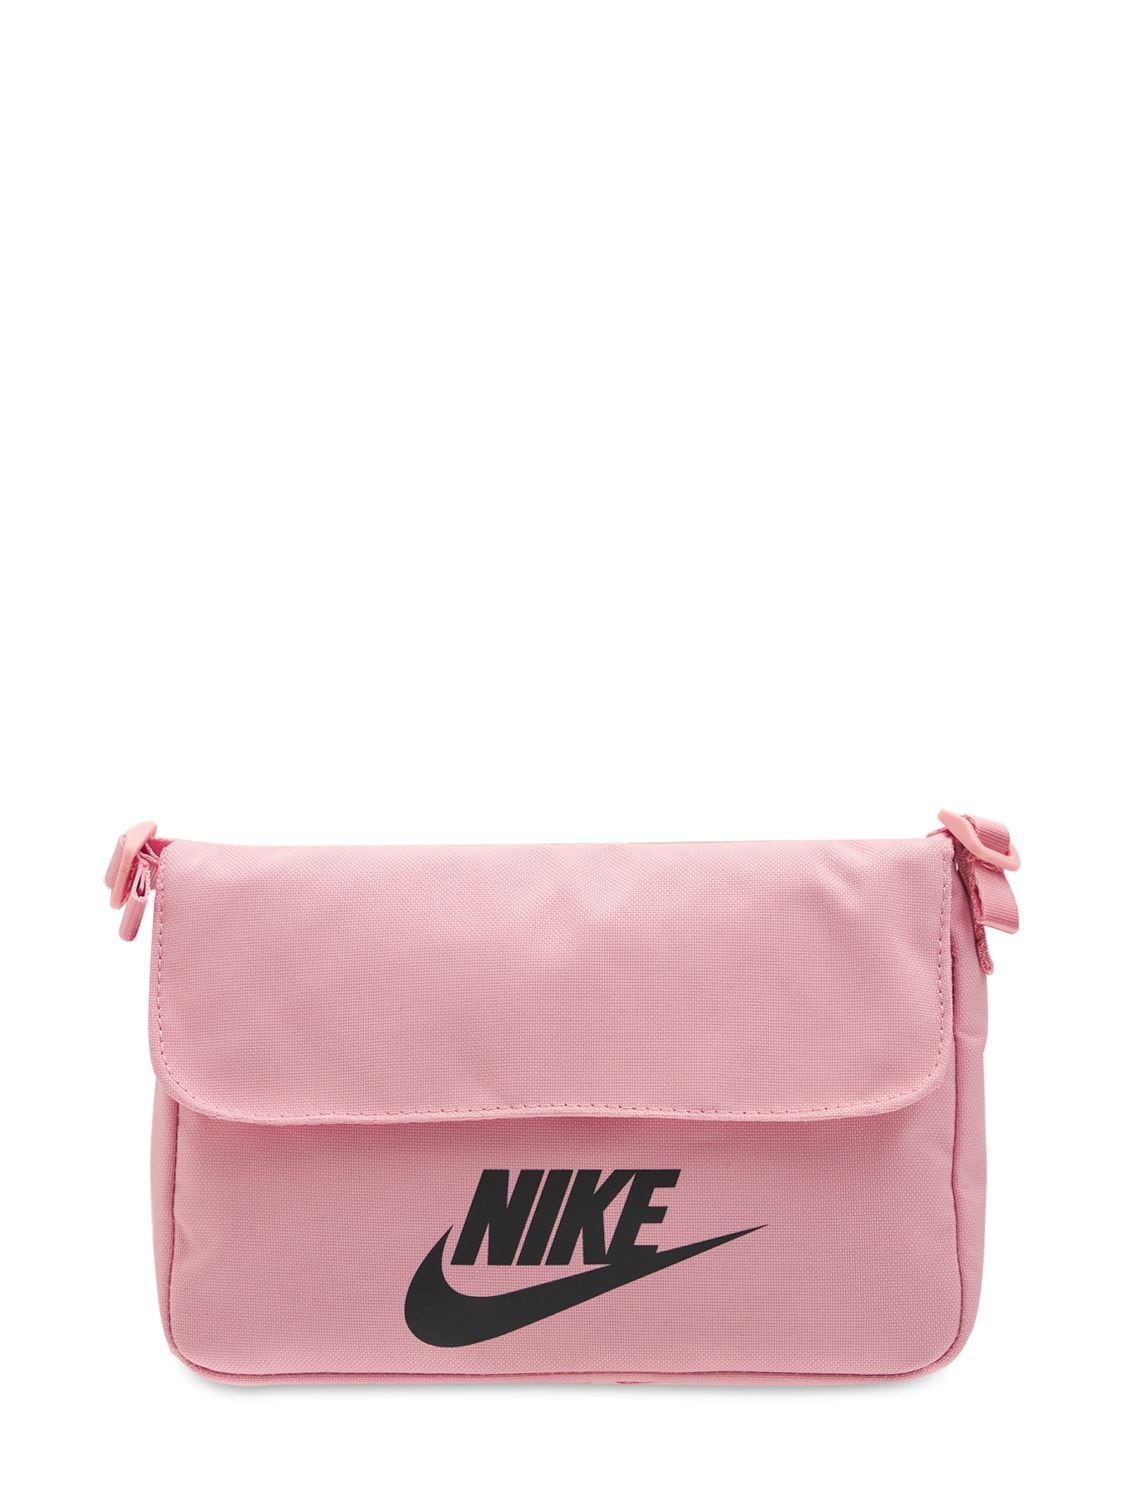 Nike Crossbody Bag In Pink